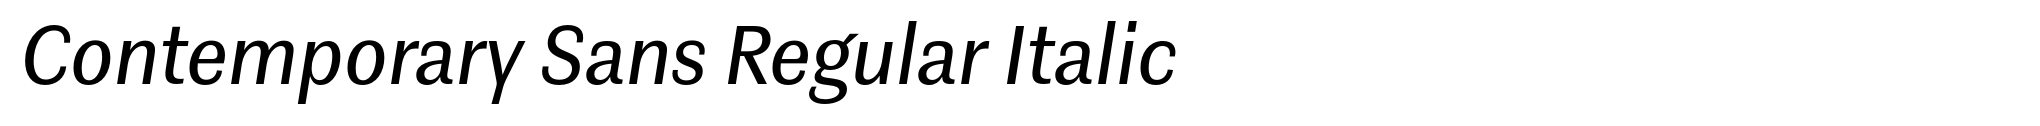 Contemporary Sans Regular Italic image